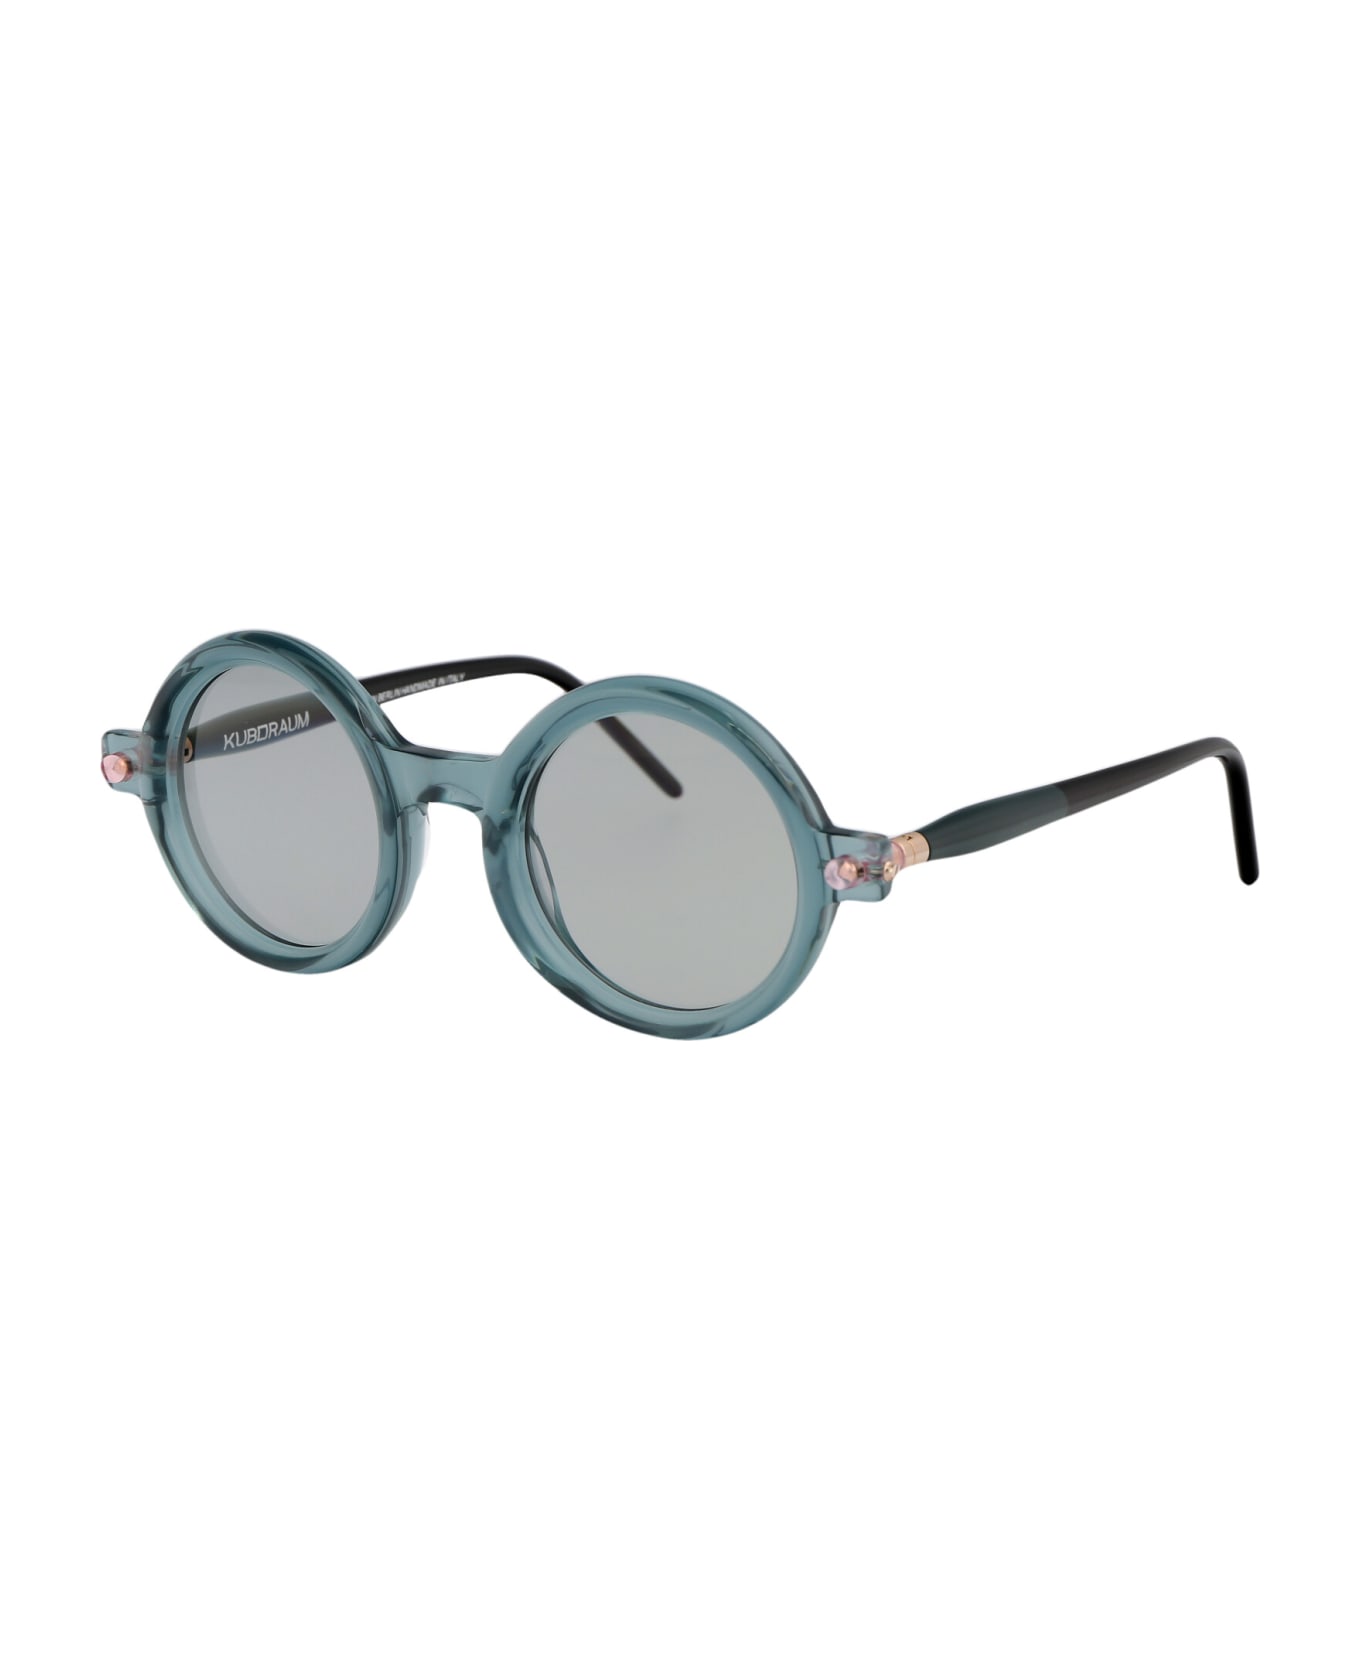 Kuboraum Maske P1 Sunglasses - MKG grey1* サングラス